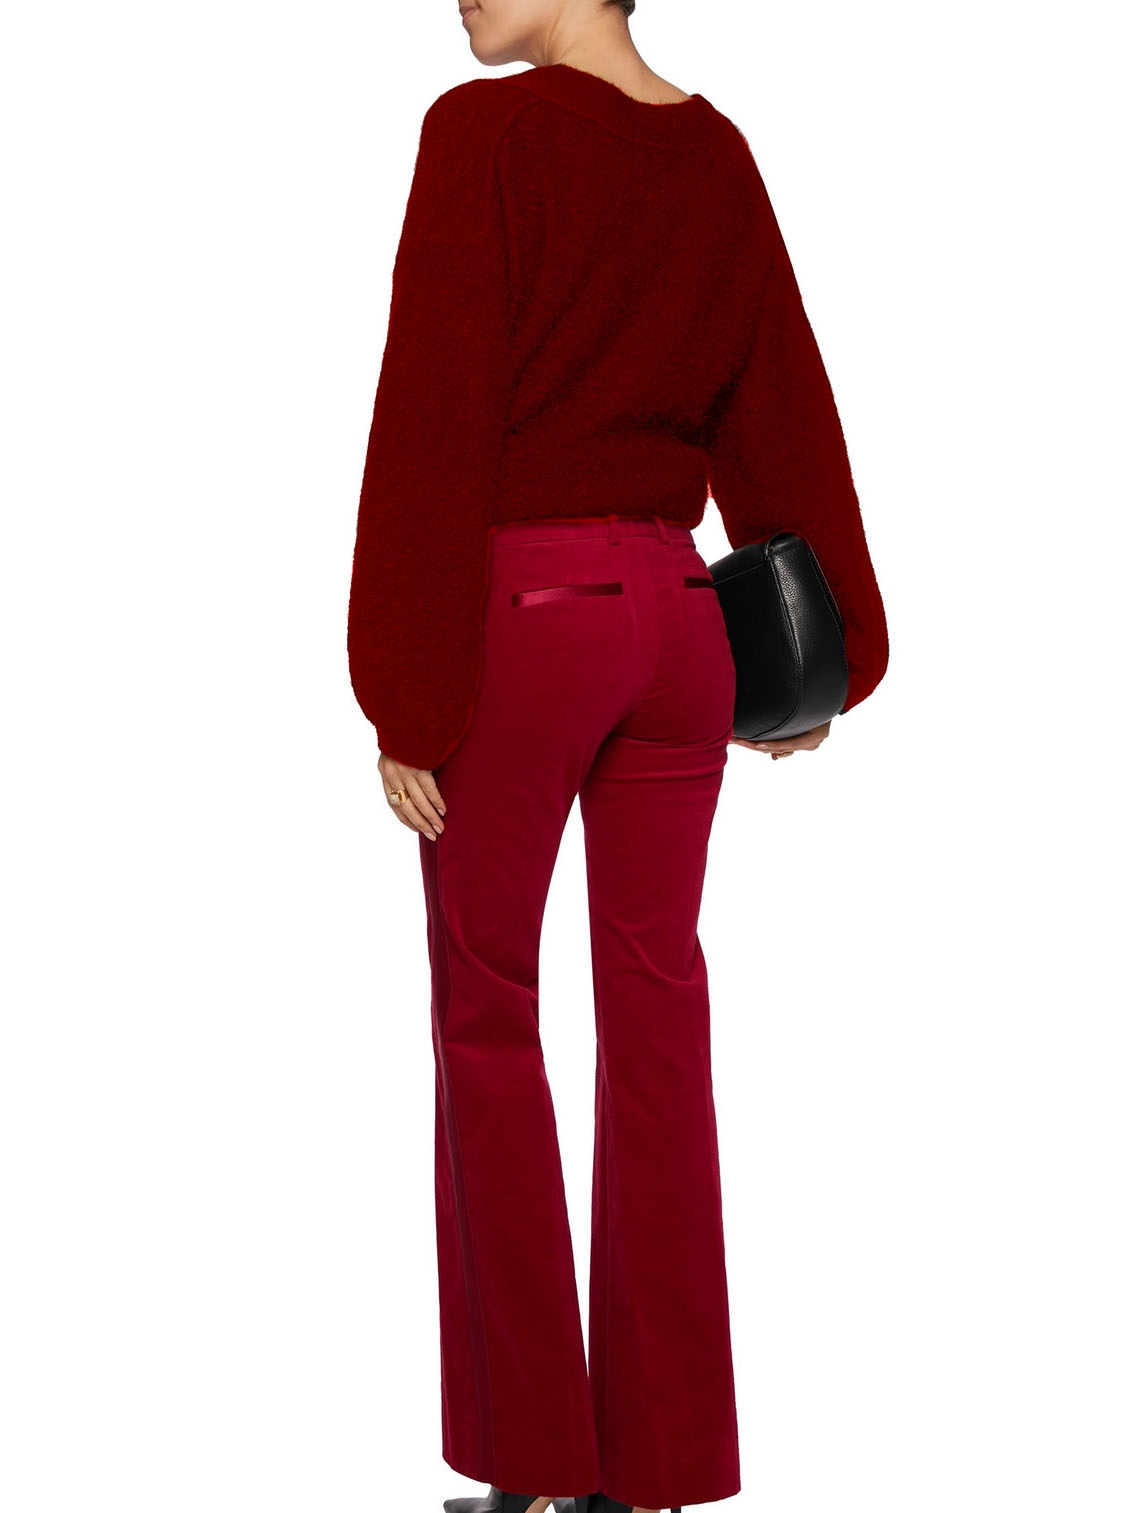 Louise Paris - MICHAEL KORS Satin-trimmed red cotton-blend velvet